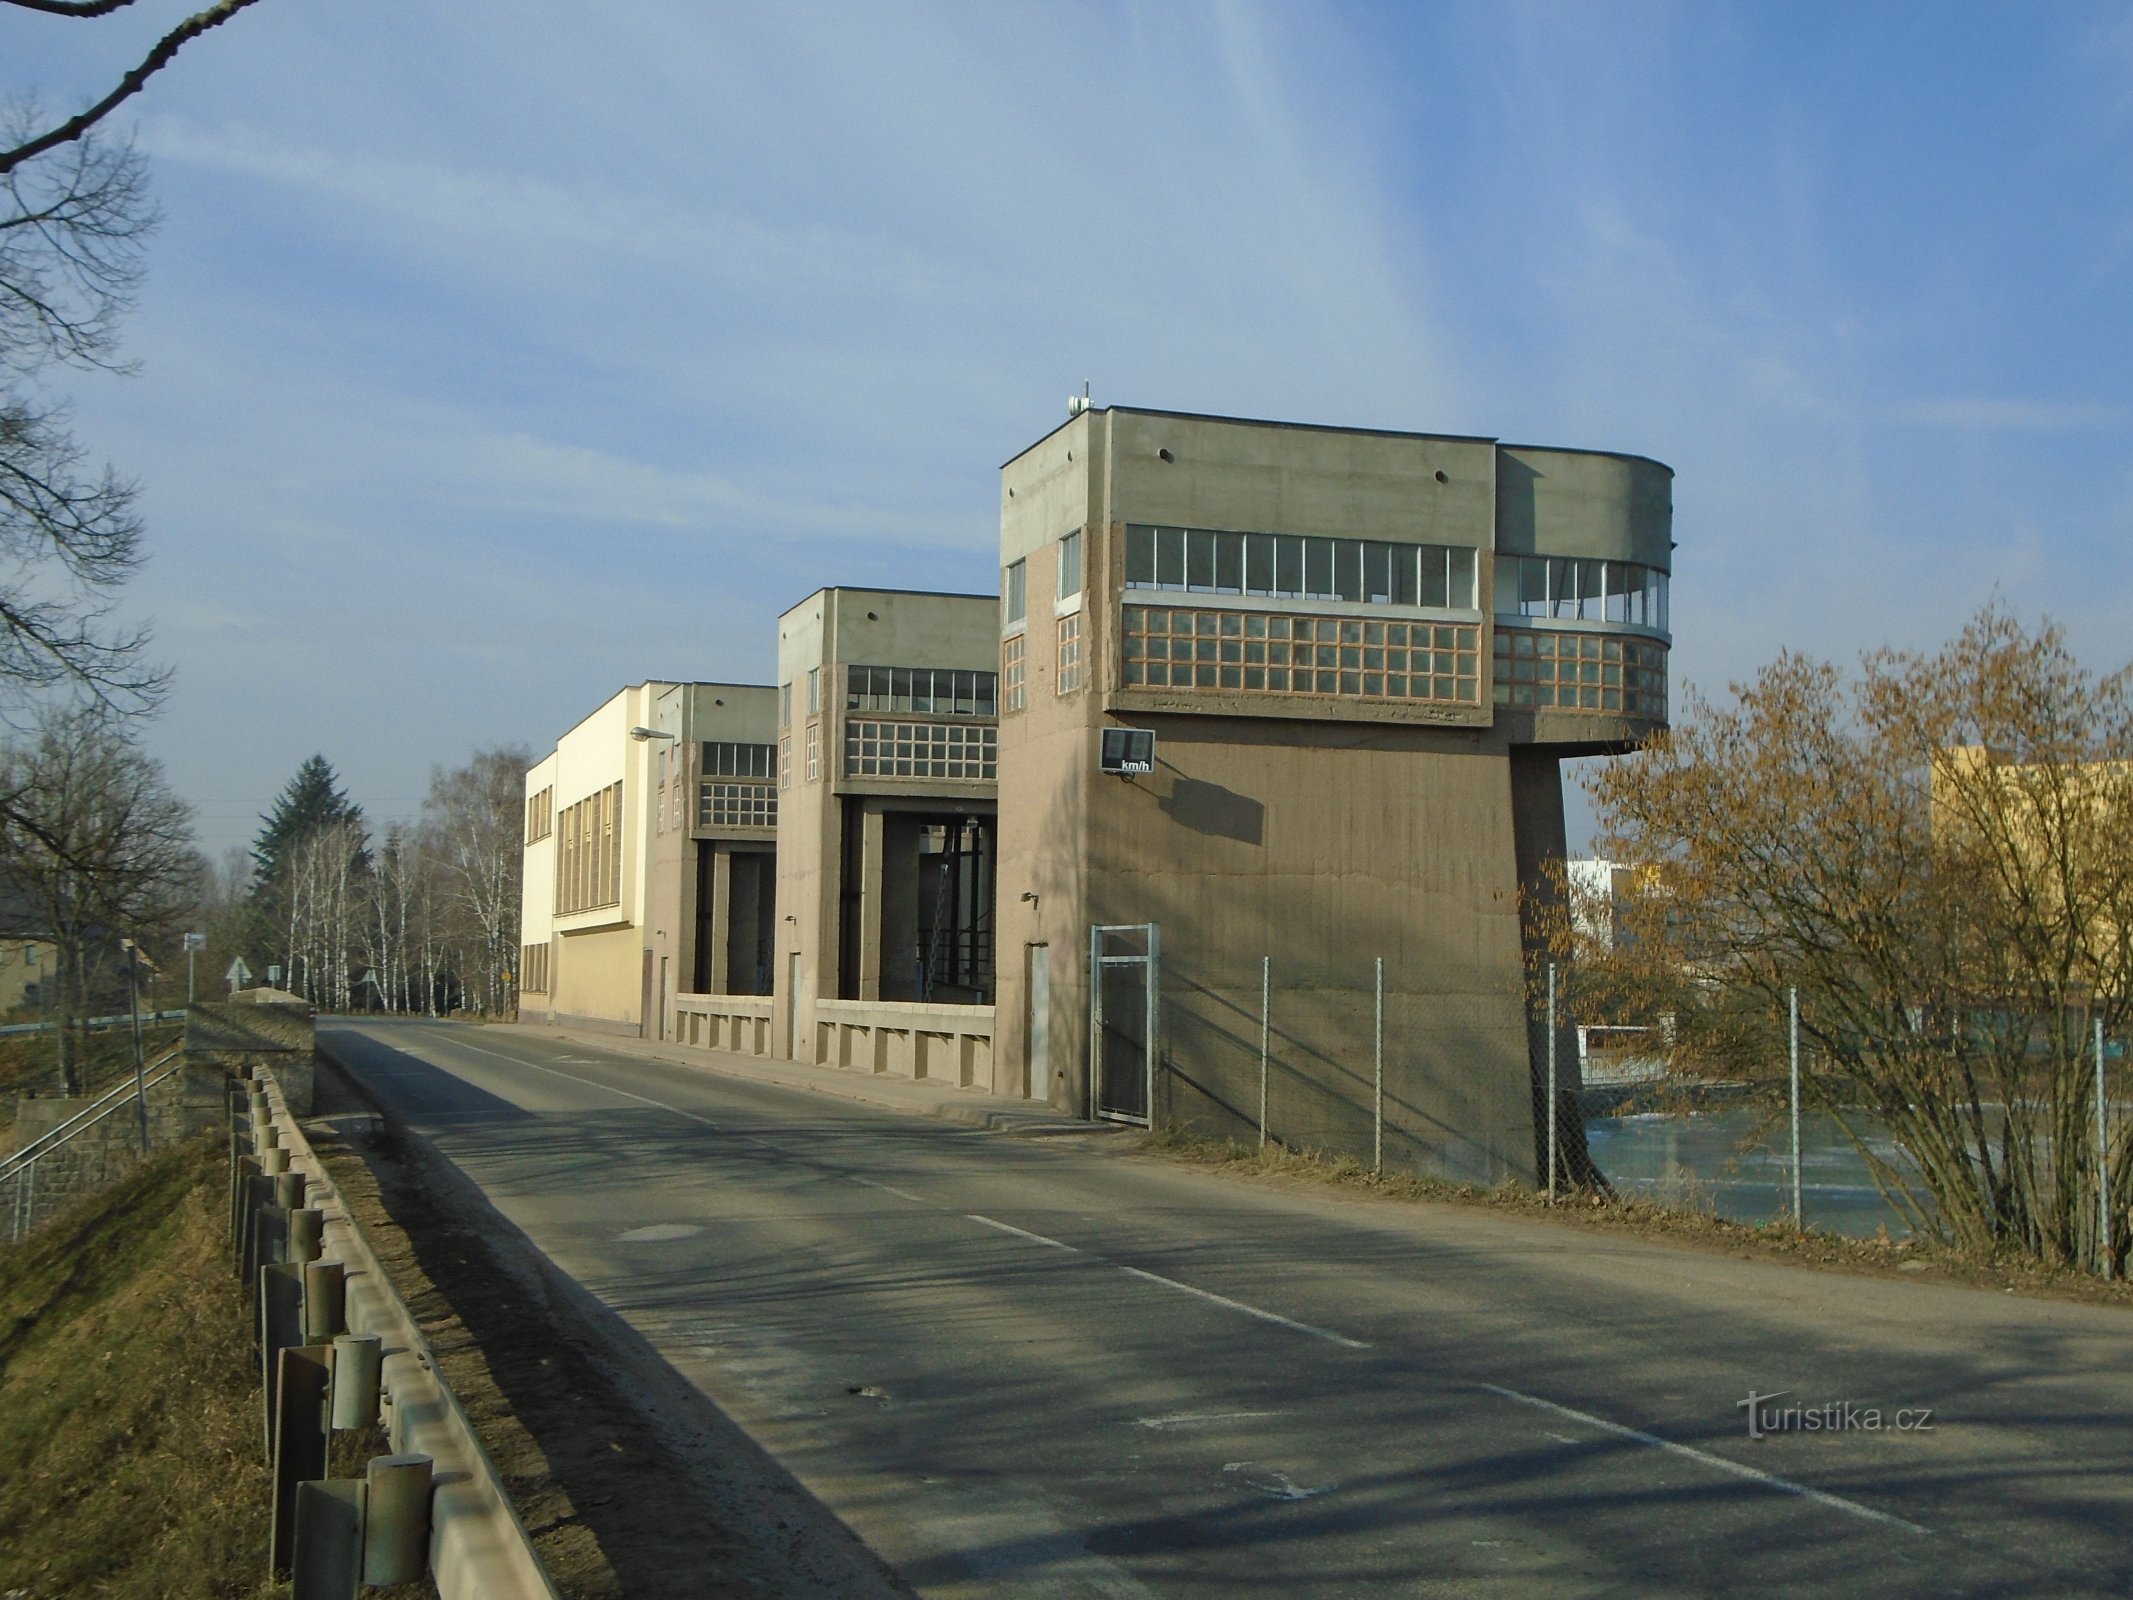 Mala hidroelektrana (Předměřice nad Labem)